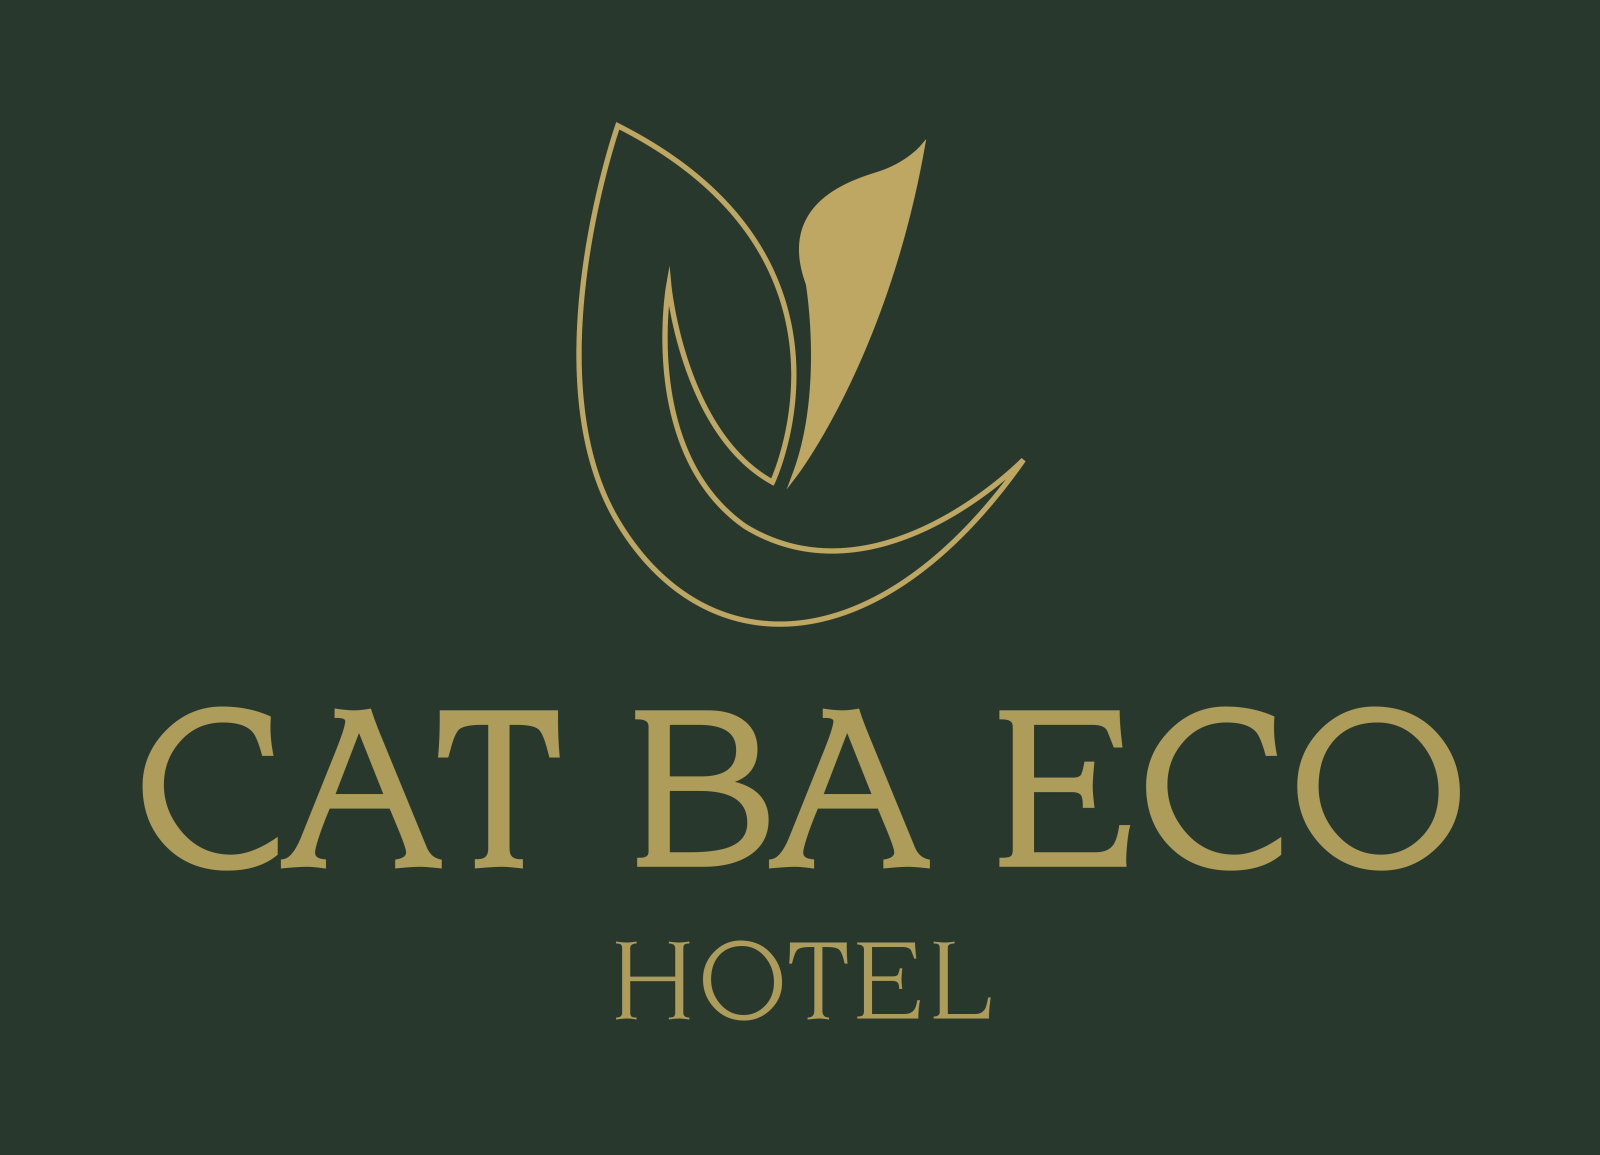 CATBA ECO HOTEL